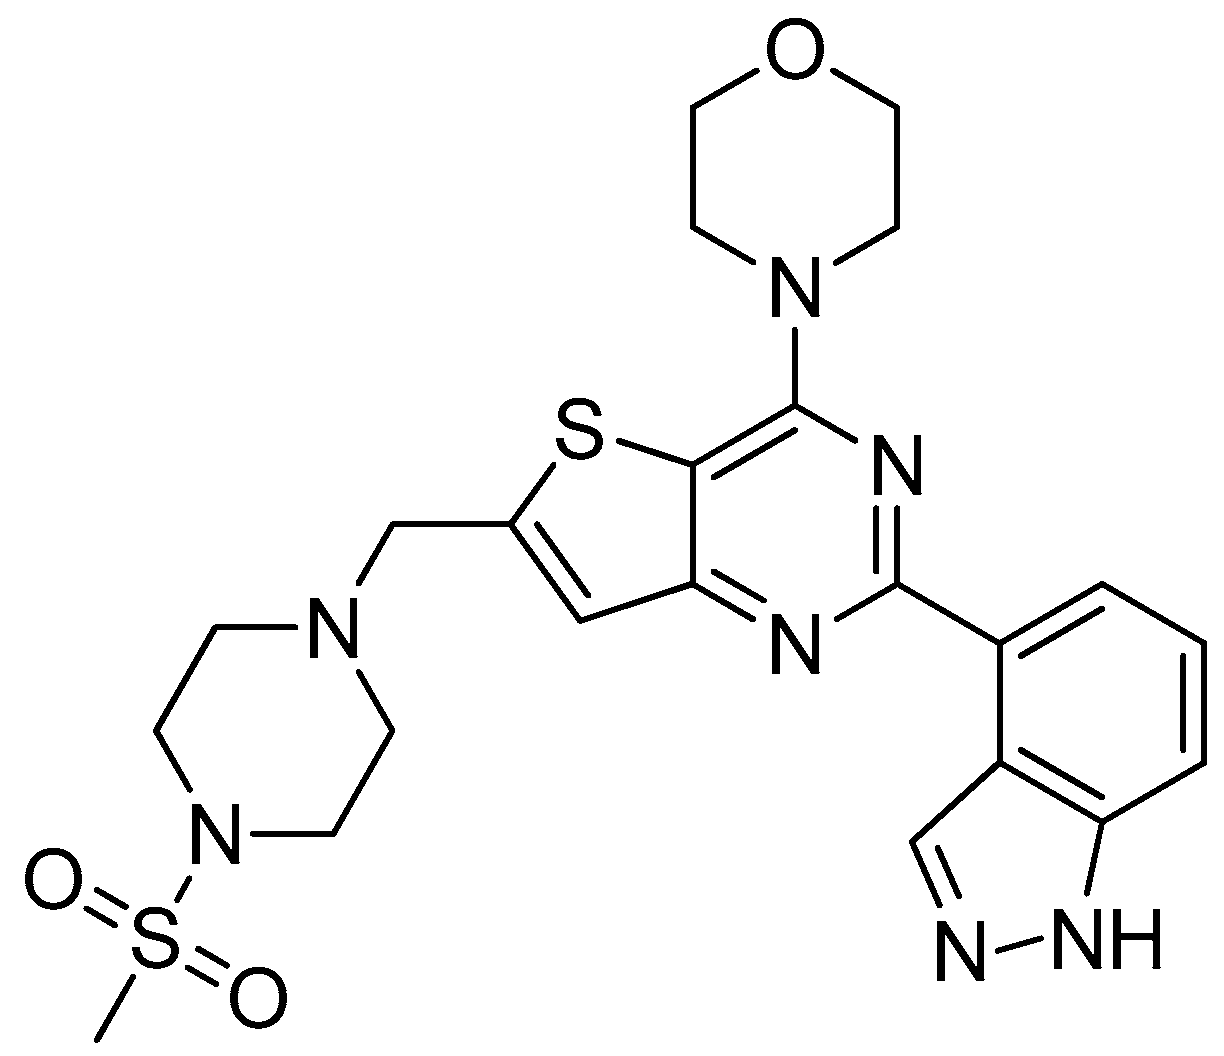 Molecules 21 00876 g001